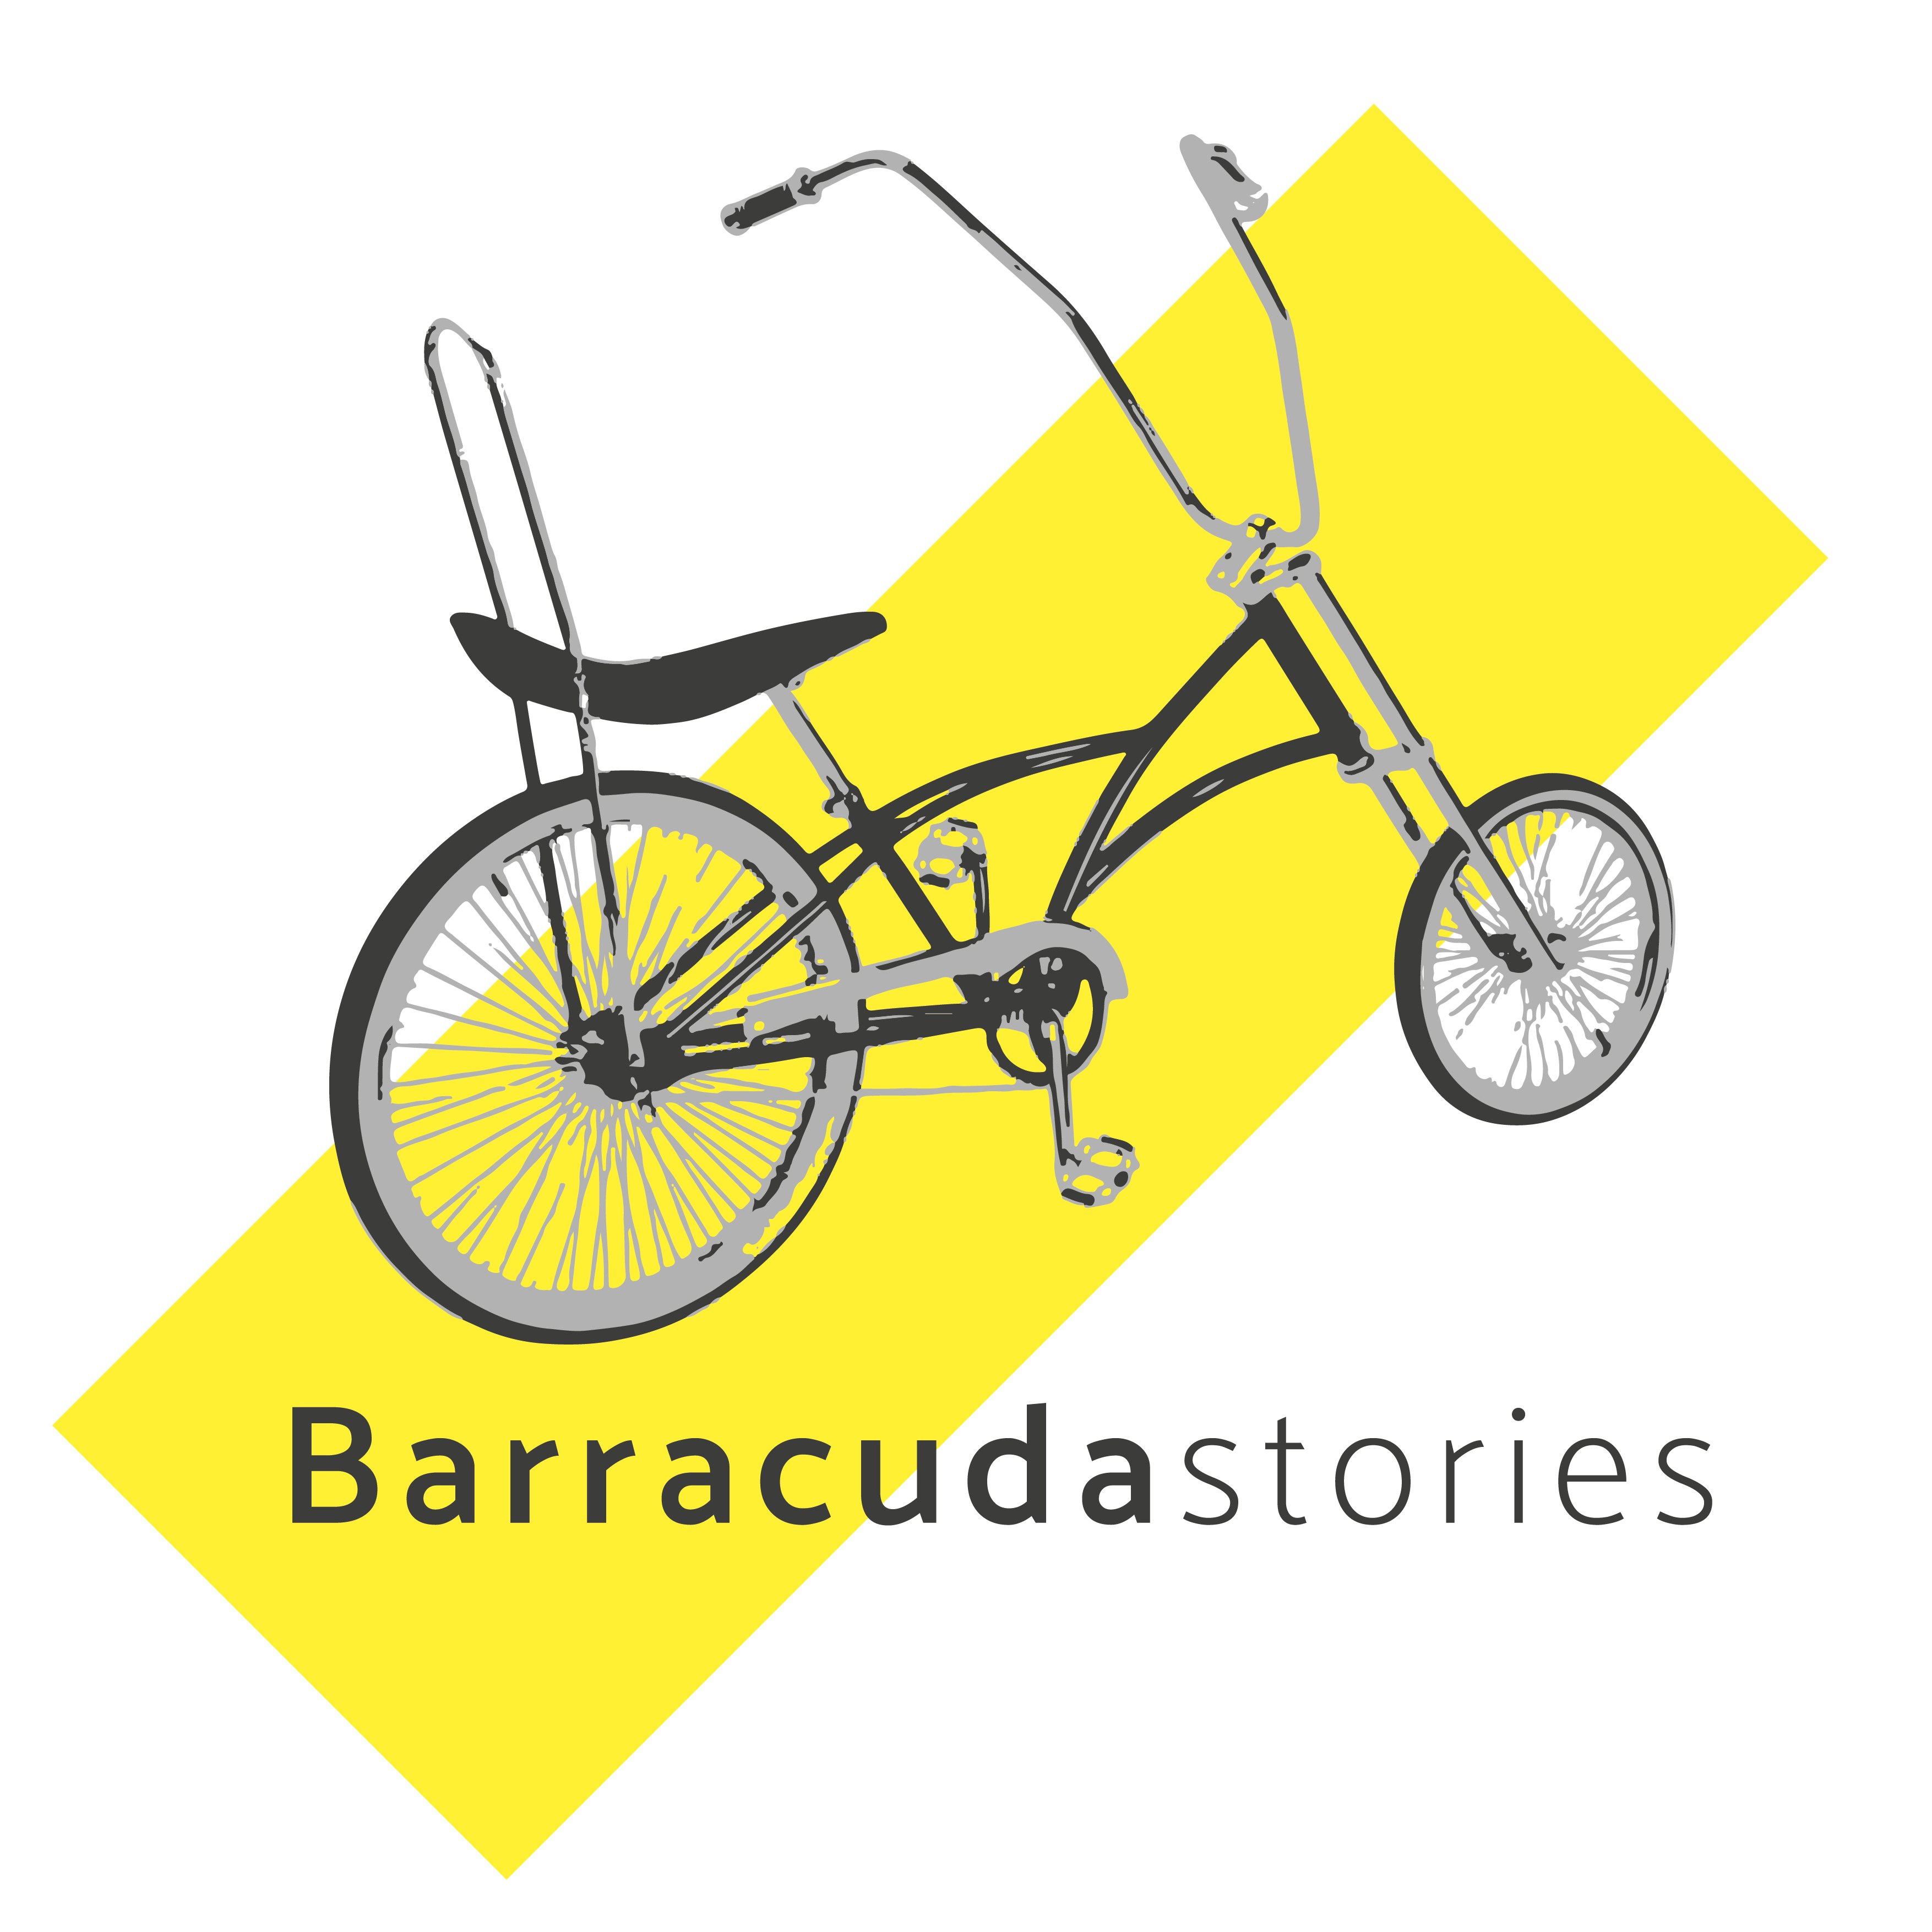 Barracuda stories